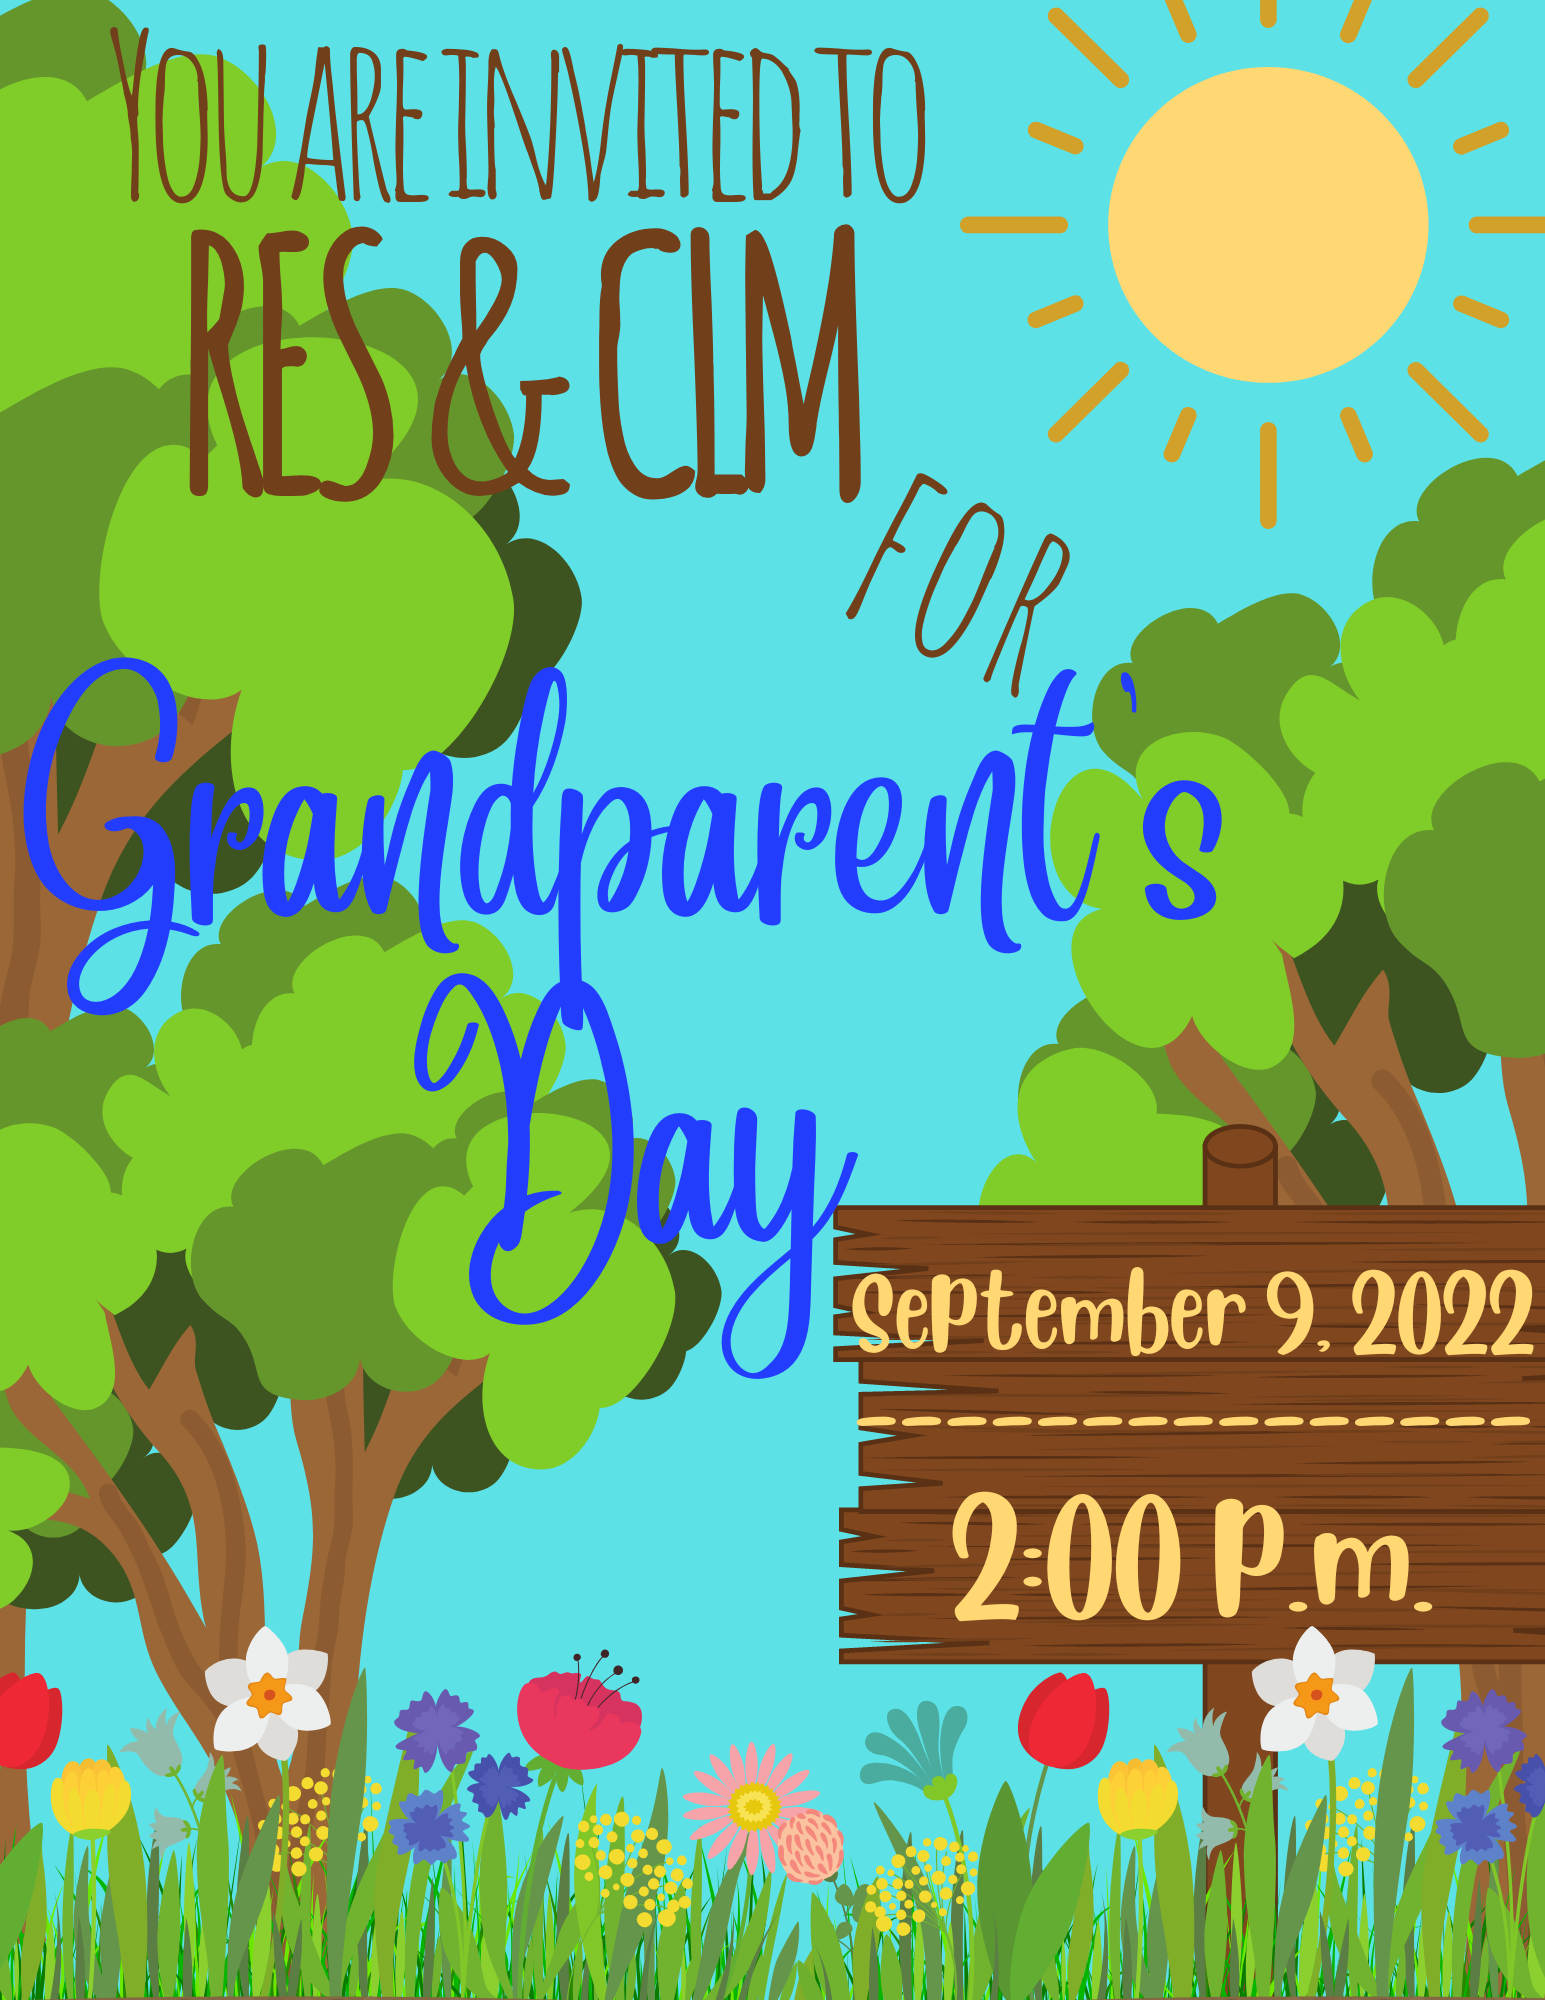 Grandparent's Day Flyer